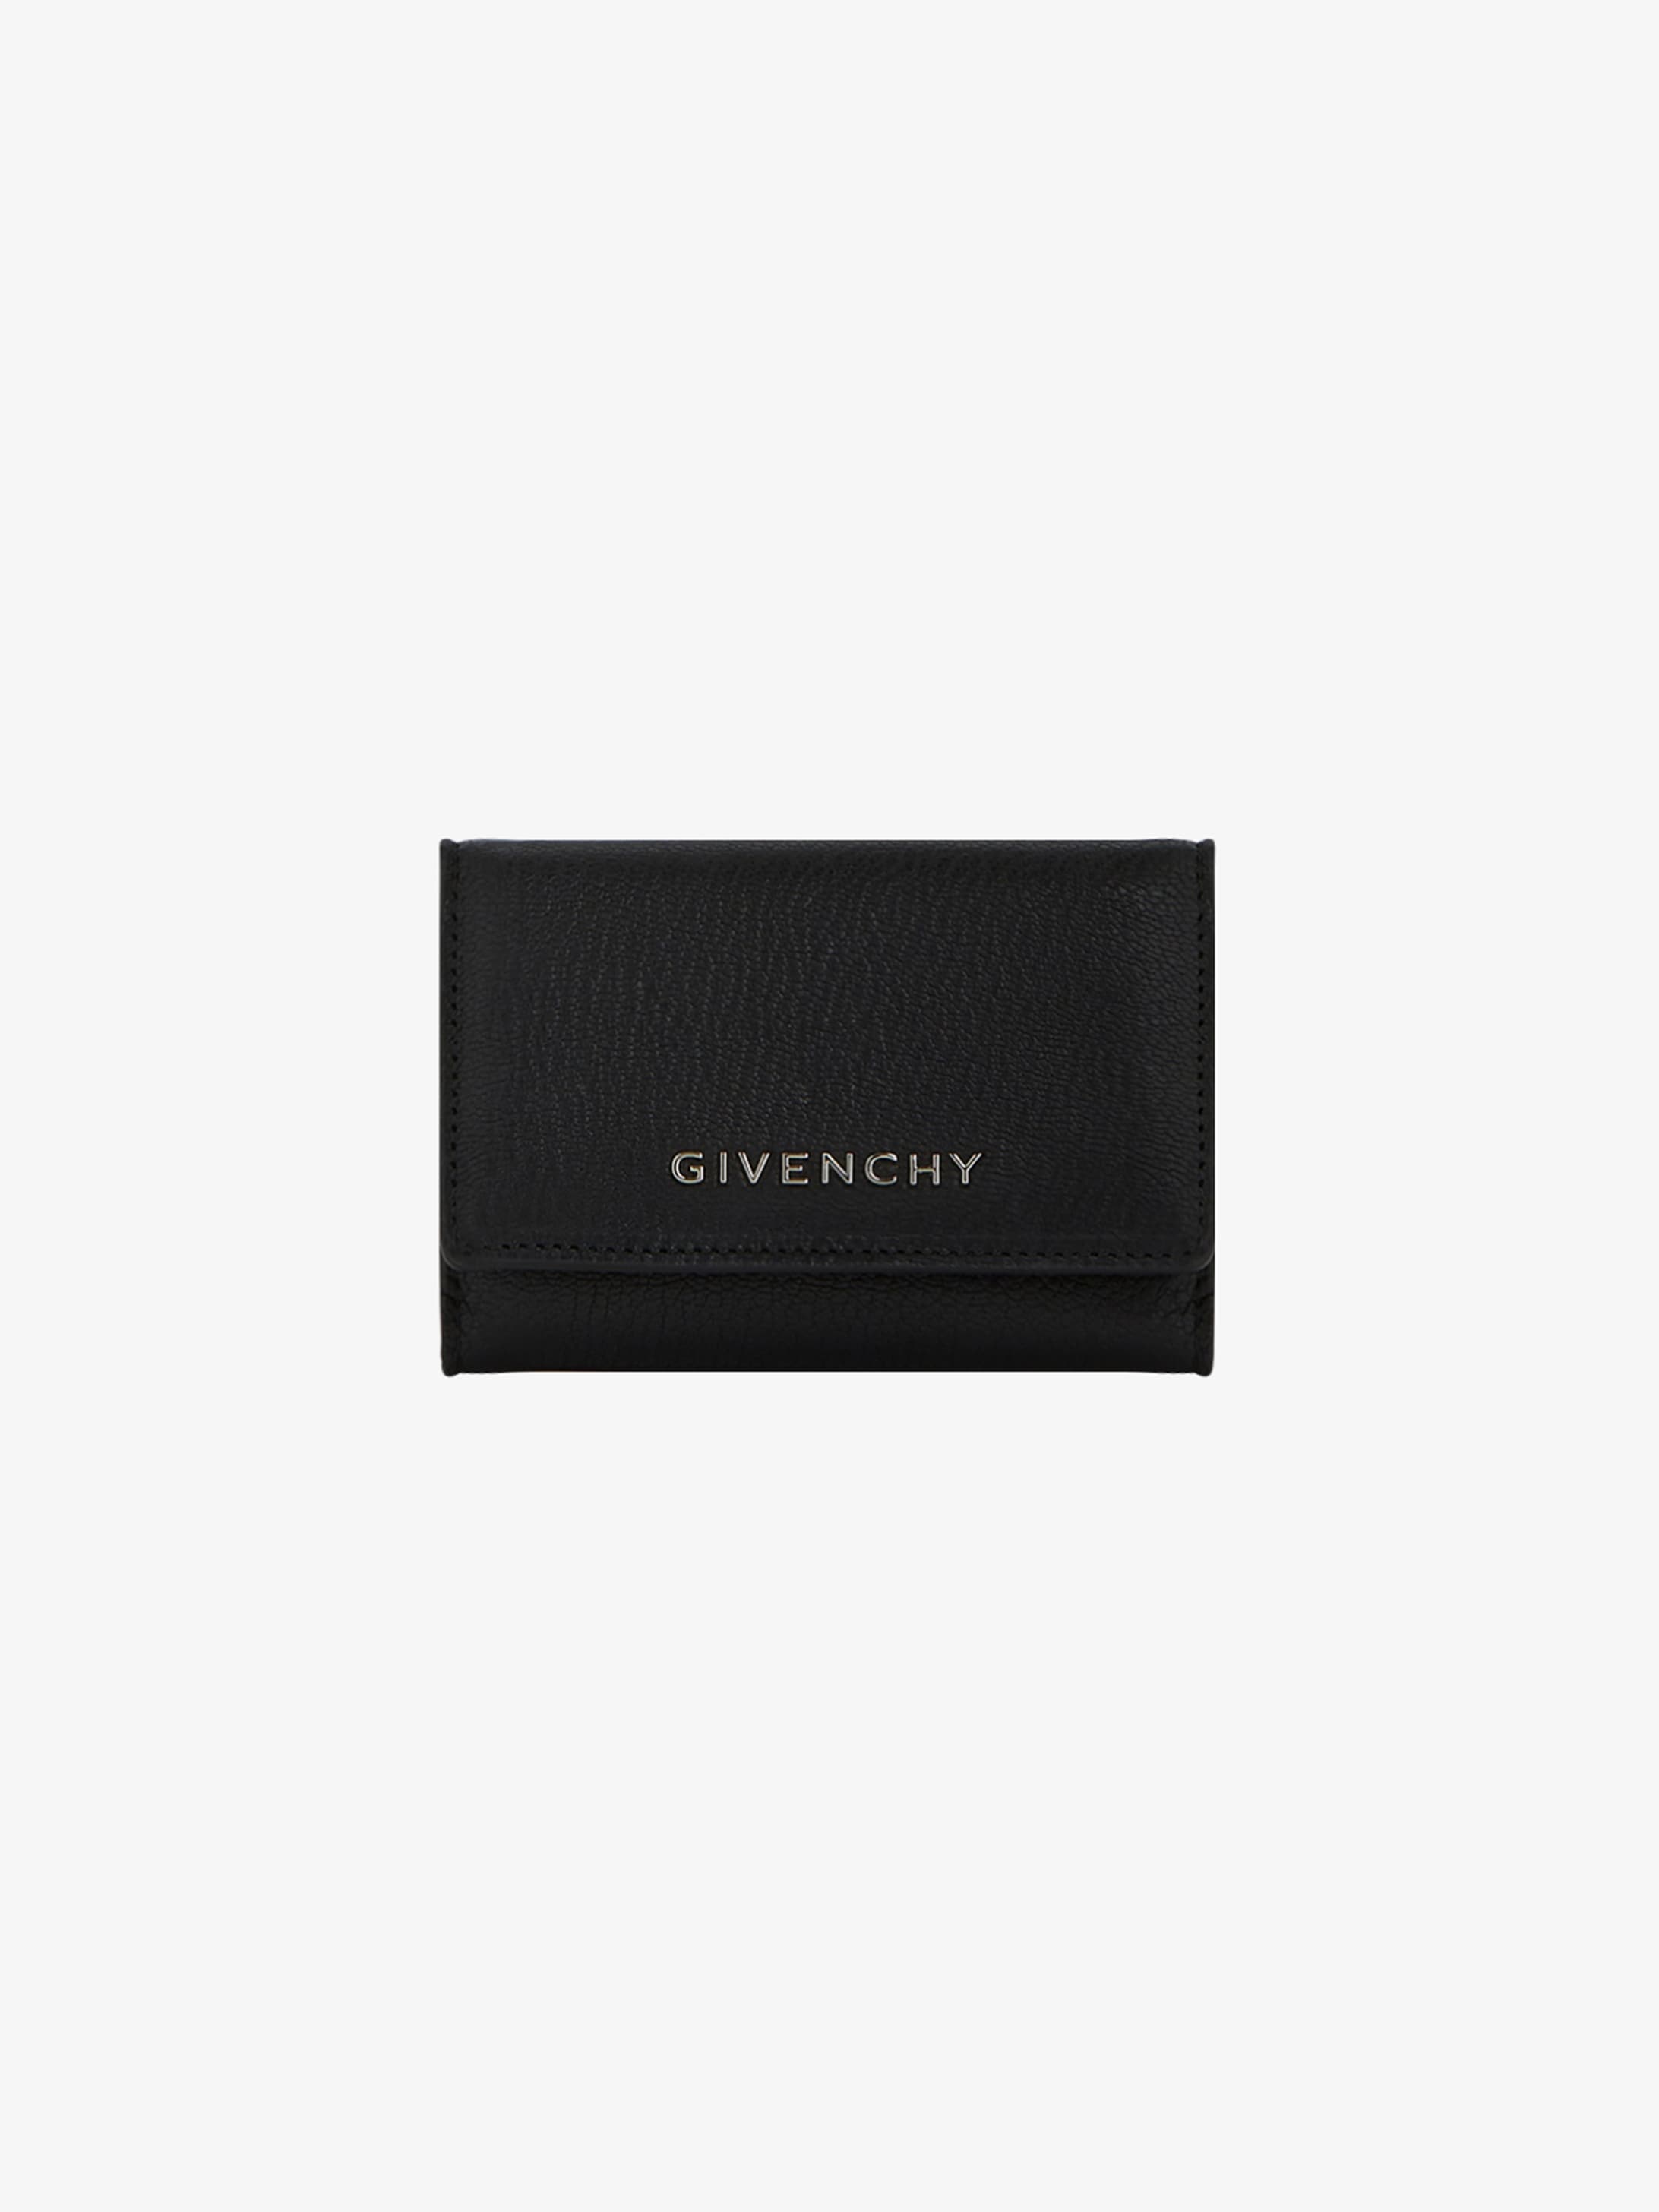 Givenchy Pandora key-holder | GIVENCHY 